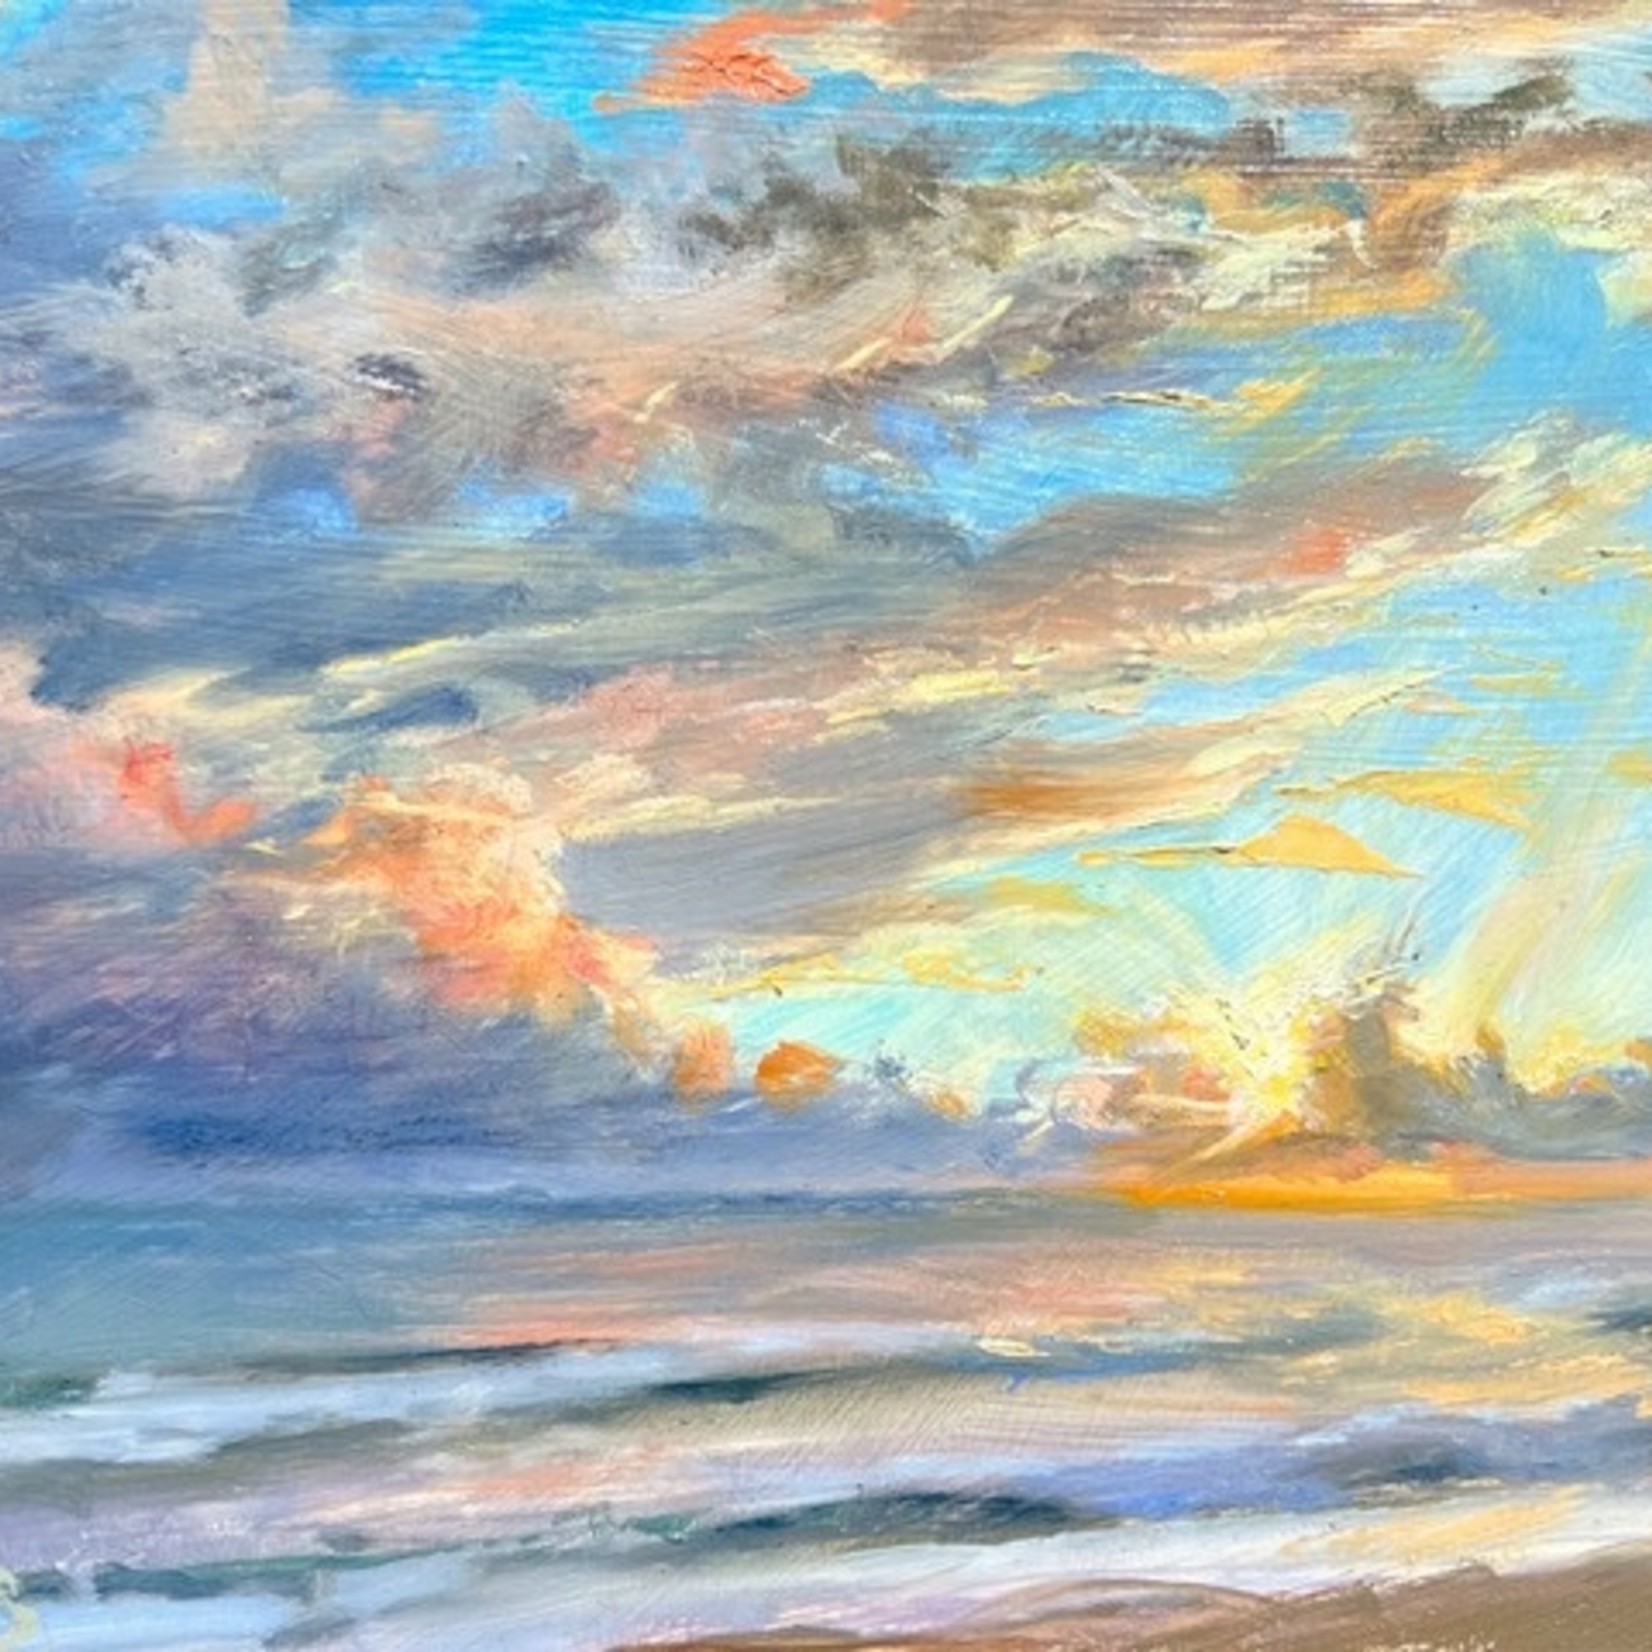 Michaelann Bellerjeau "Morning Storms Abate", oil on ACM, framed 8x10", MICB